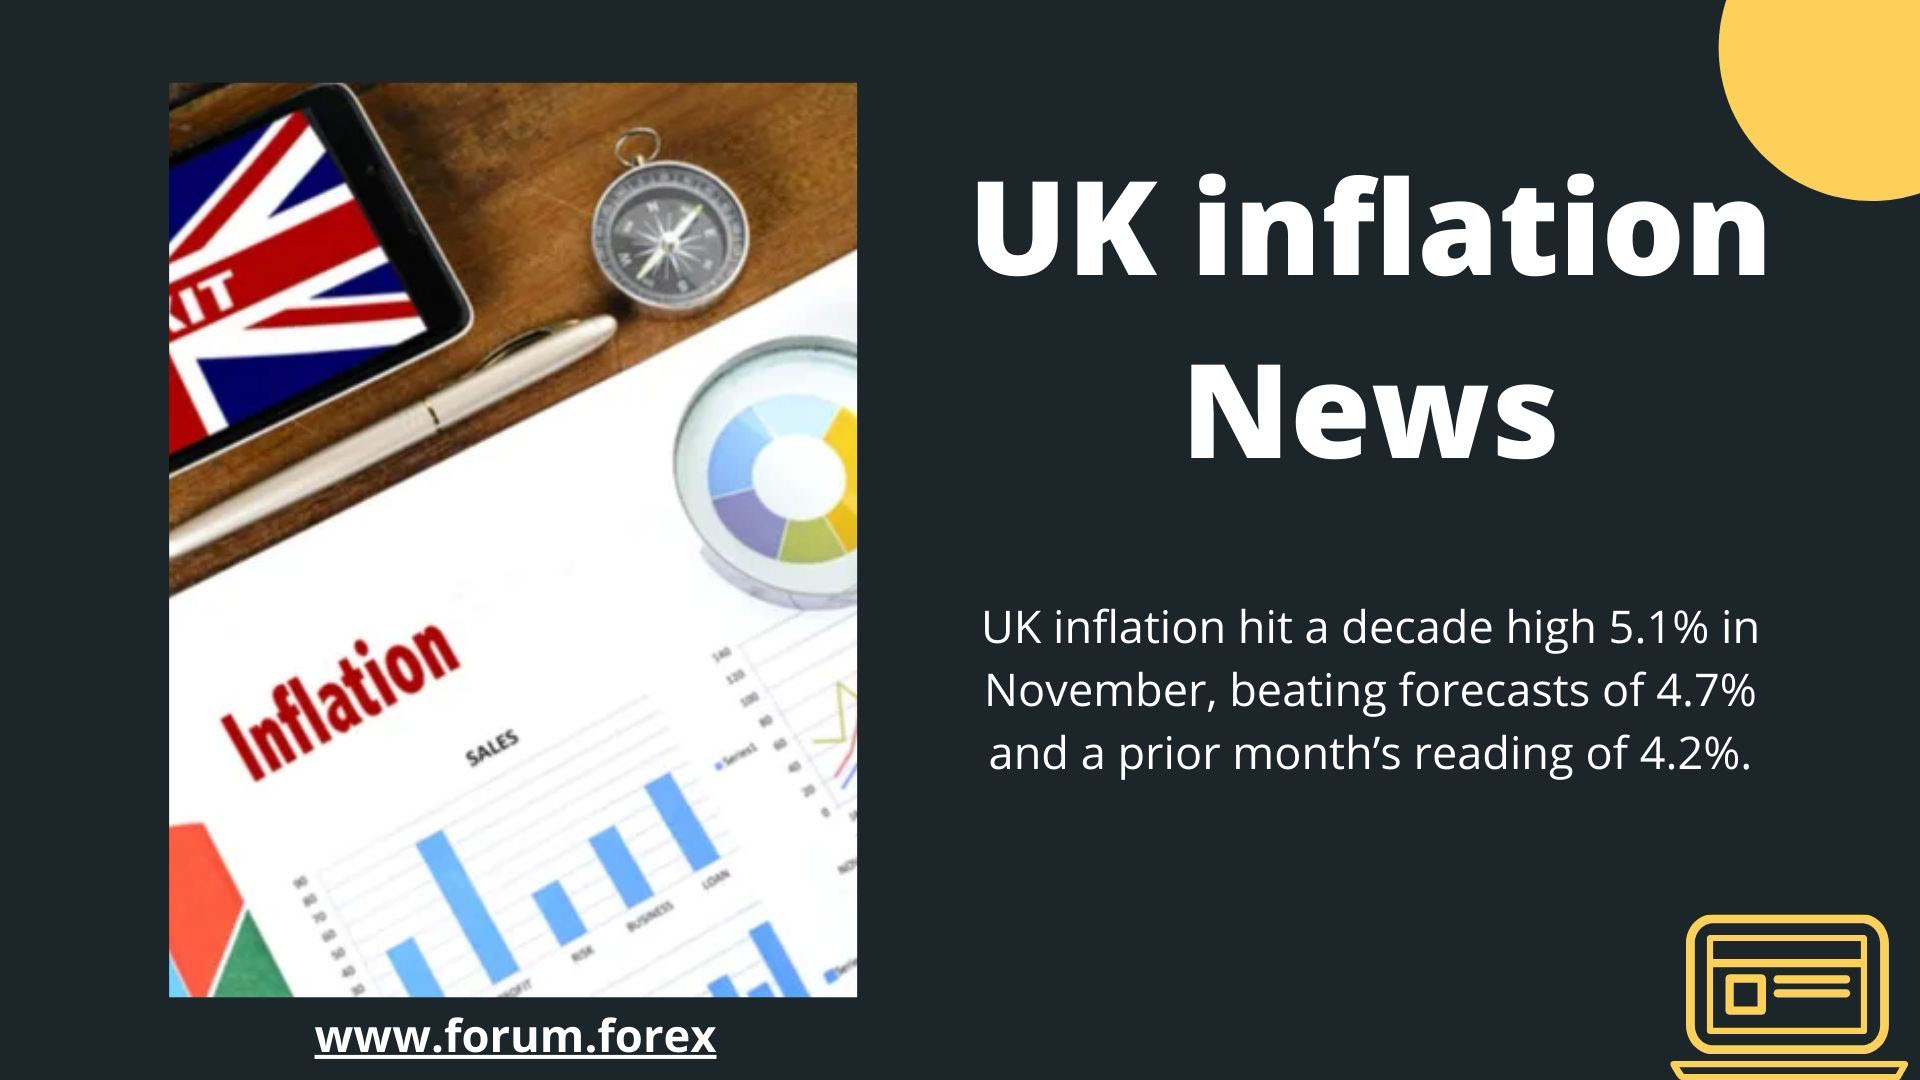 UK inflation copy.jpg